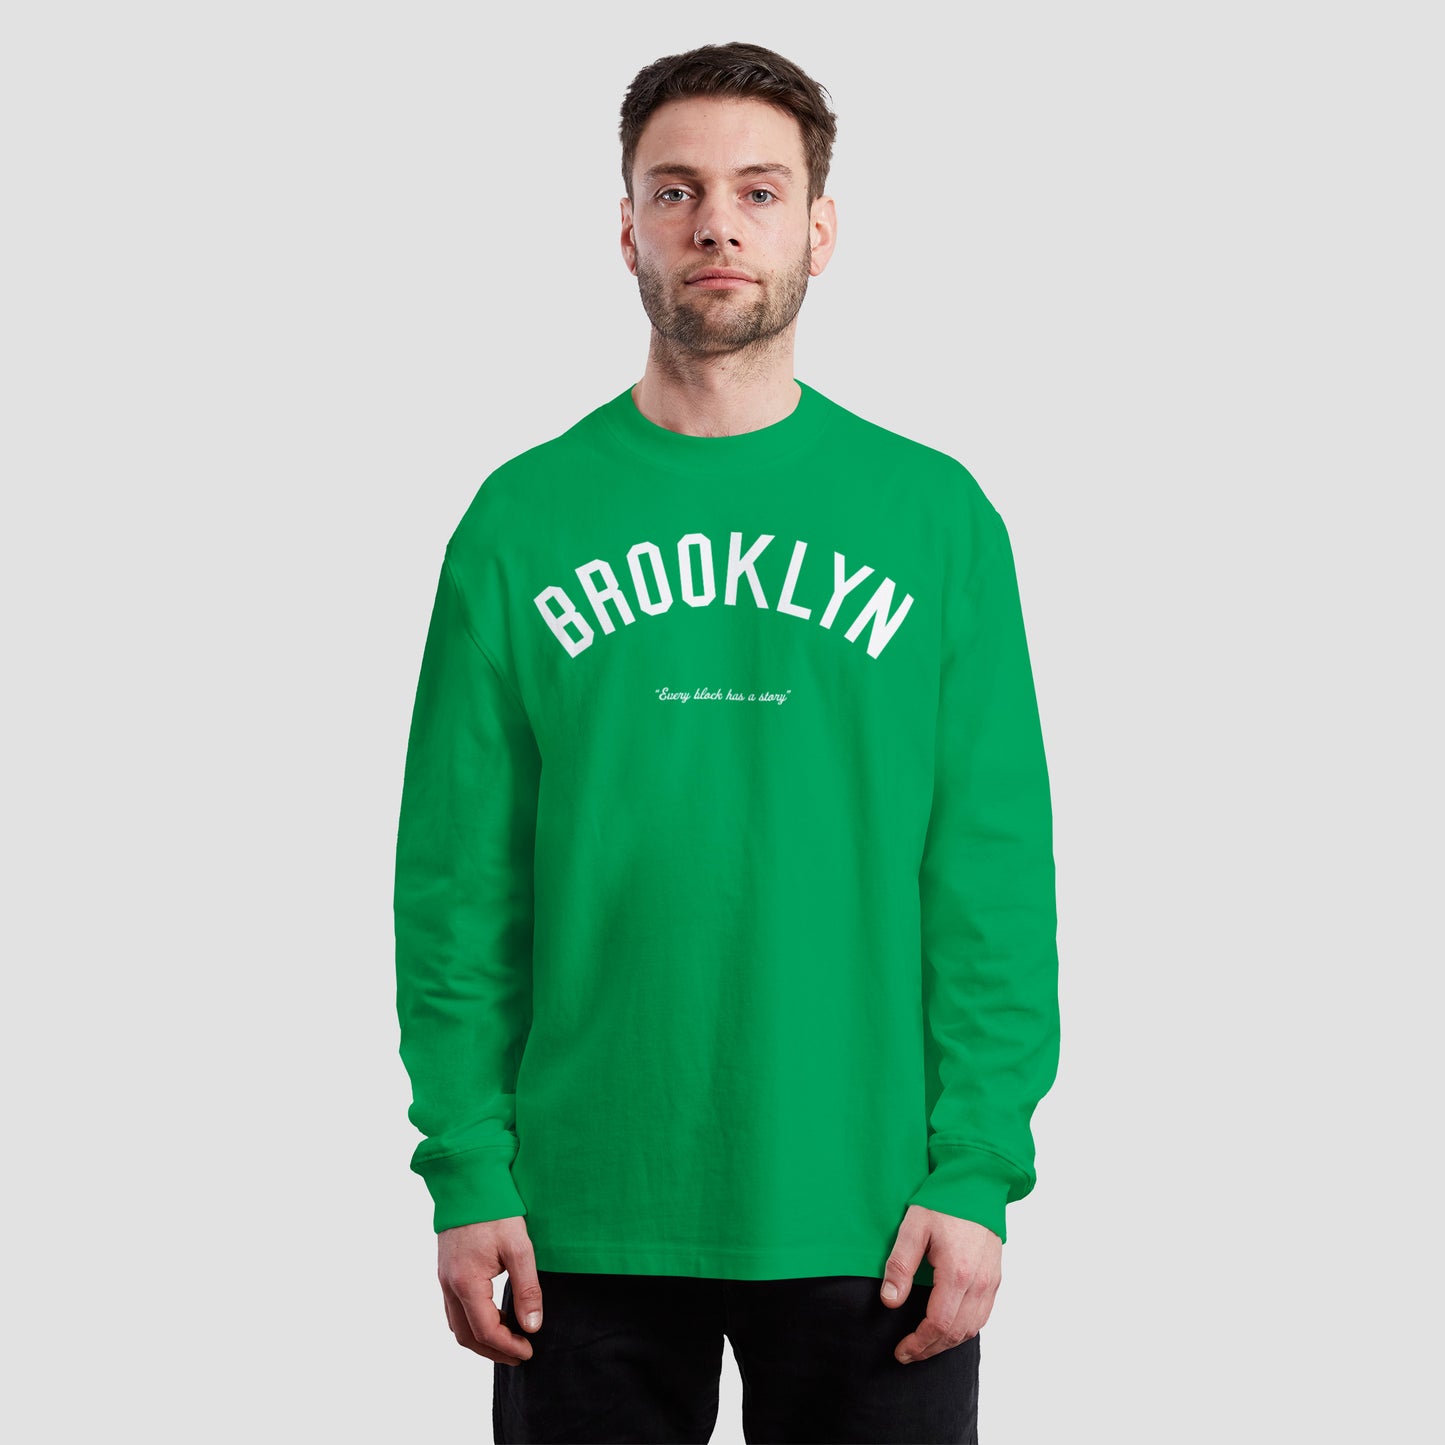 Brooklyn Story T-shirt